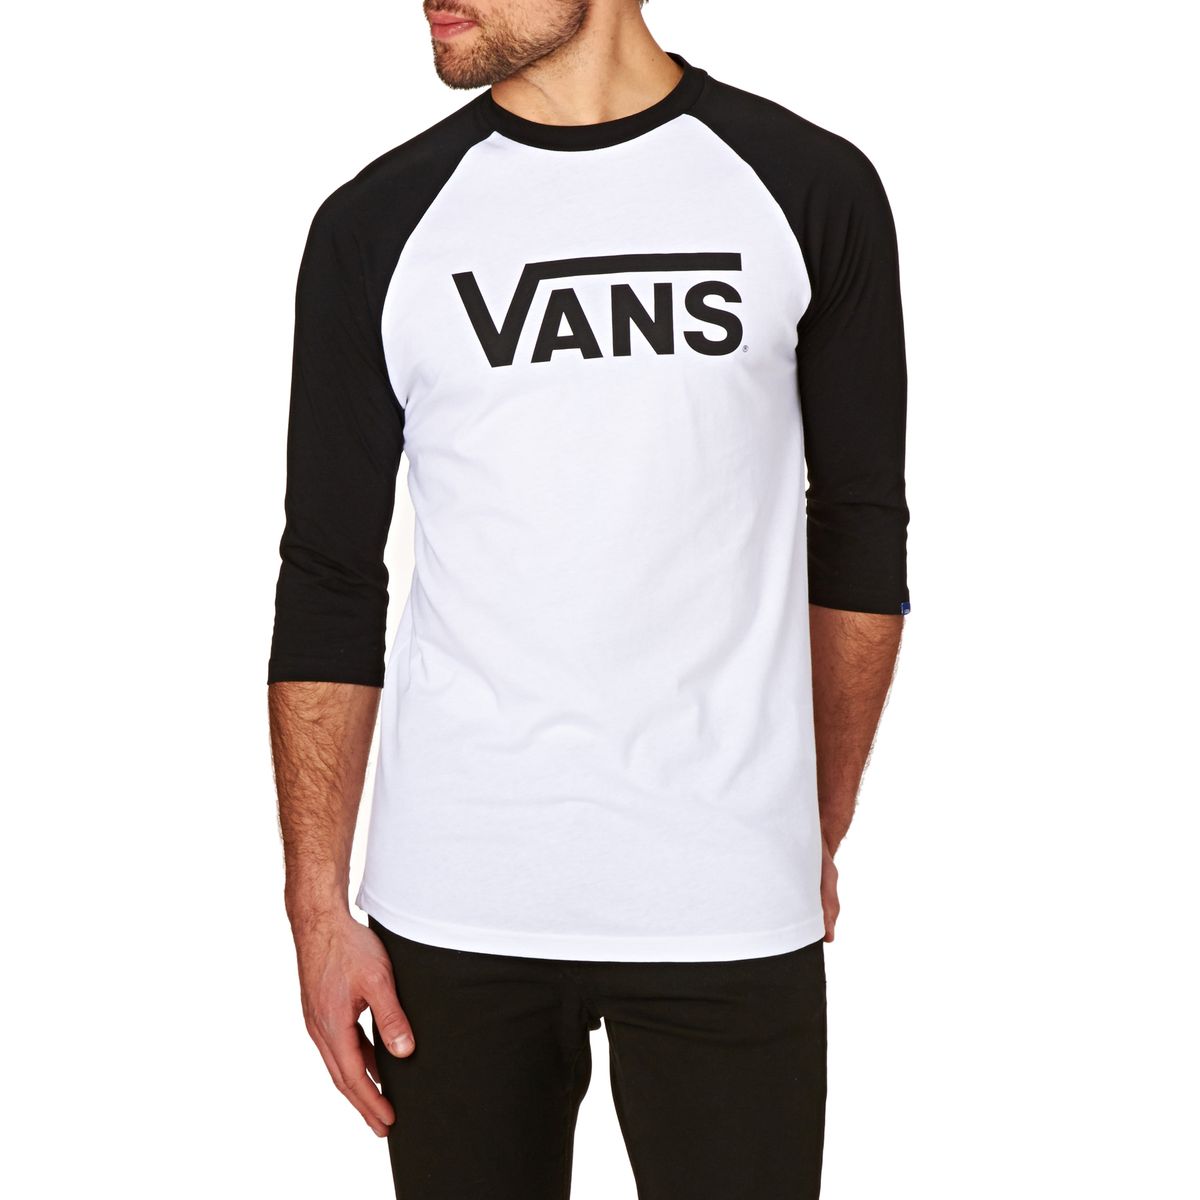 vans white and black t shirt